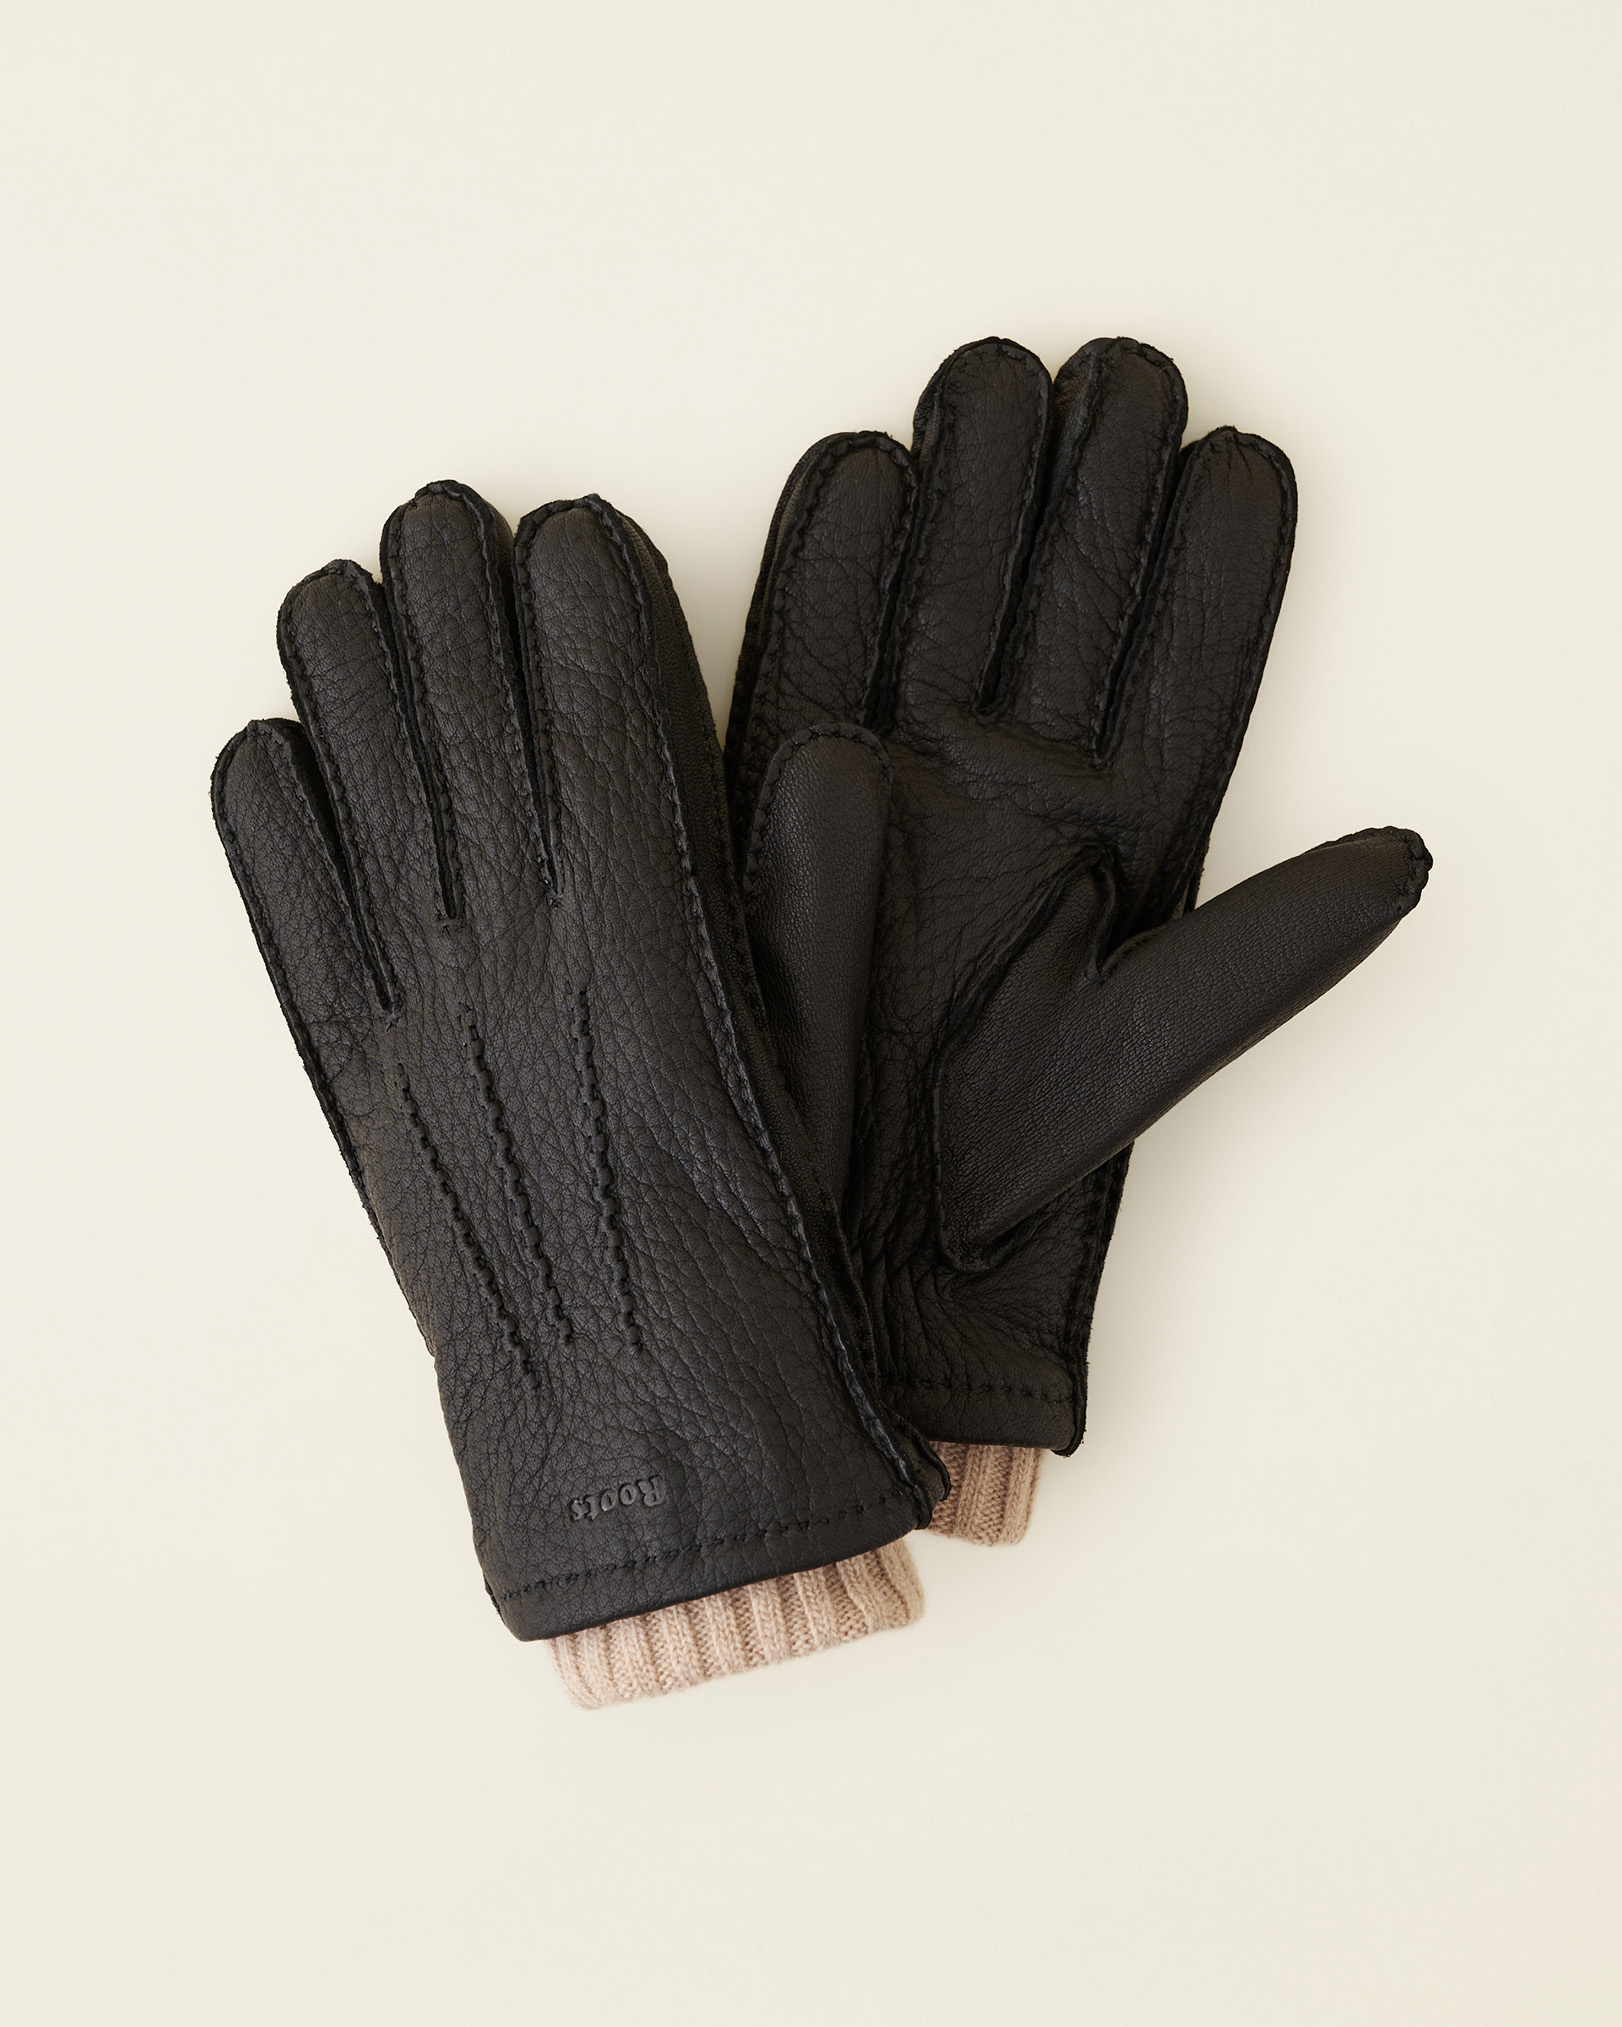 Roots Men's Cuff Deerskin Glove in Black